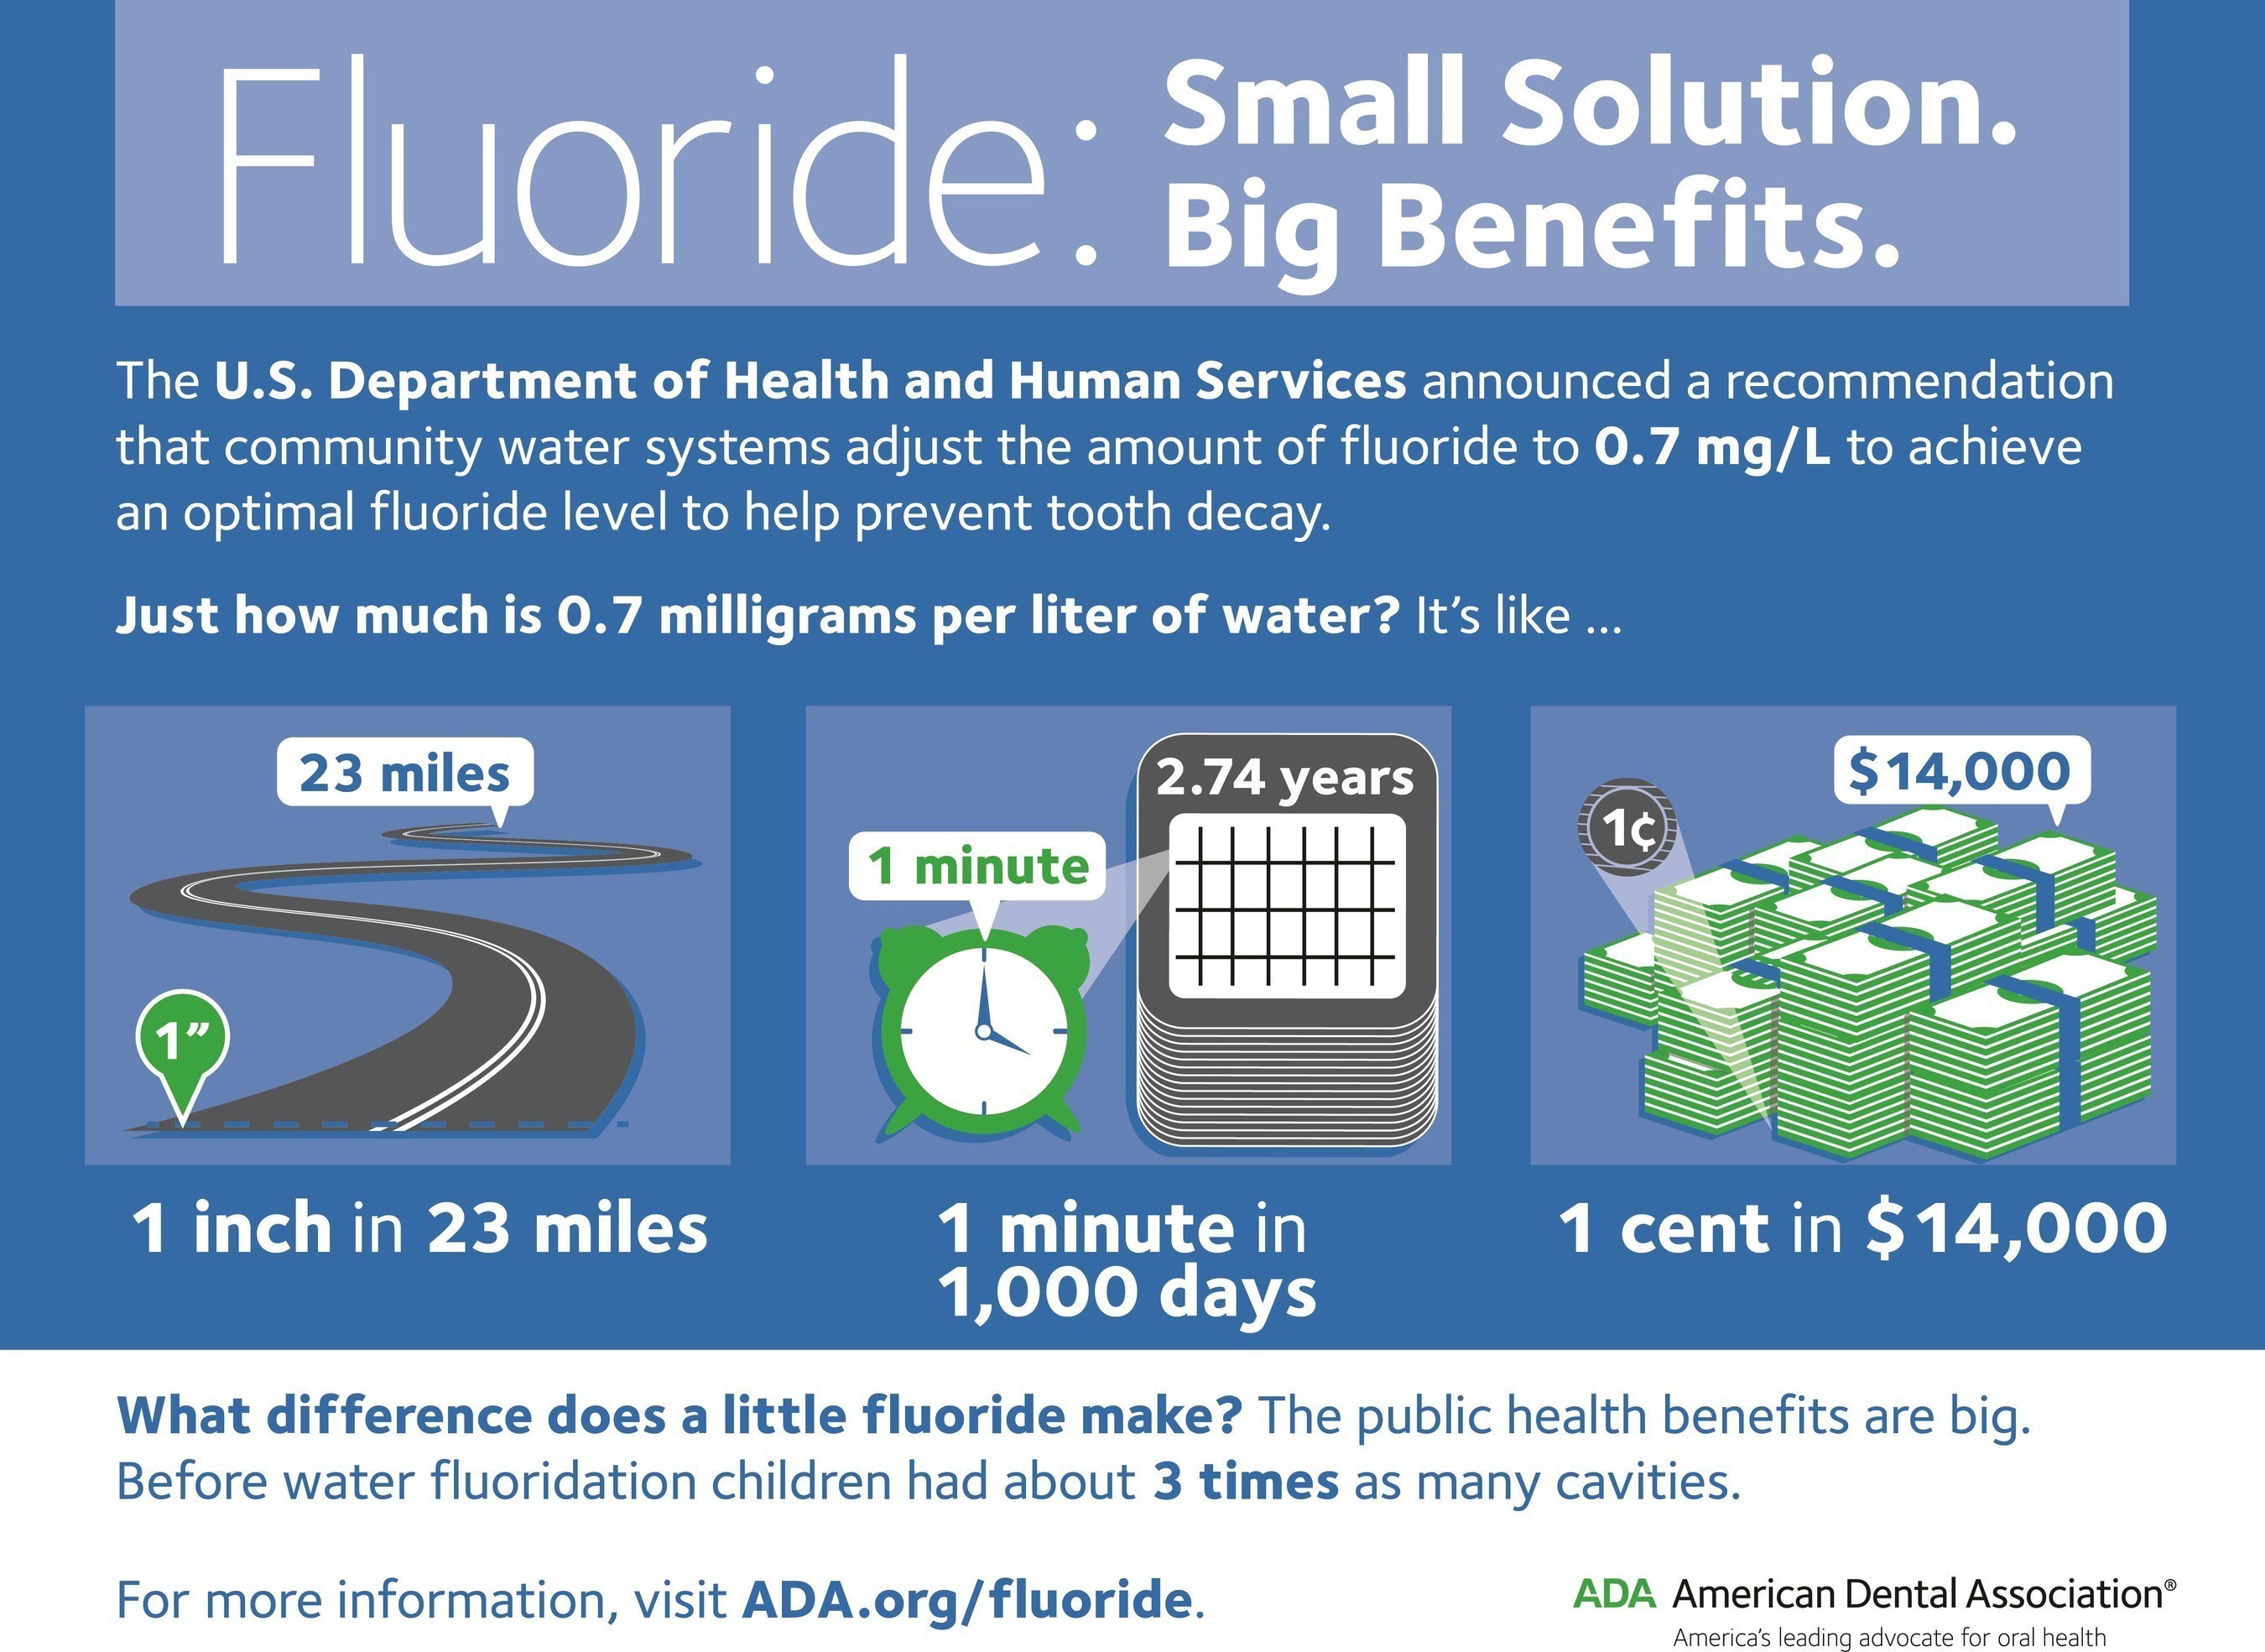 Fluoride: Small Solution, Big Benefits